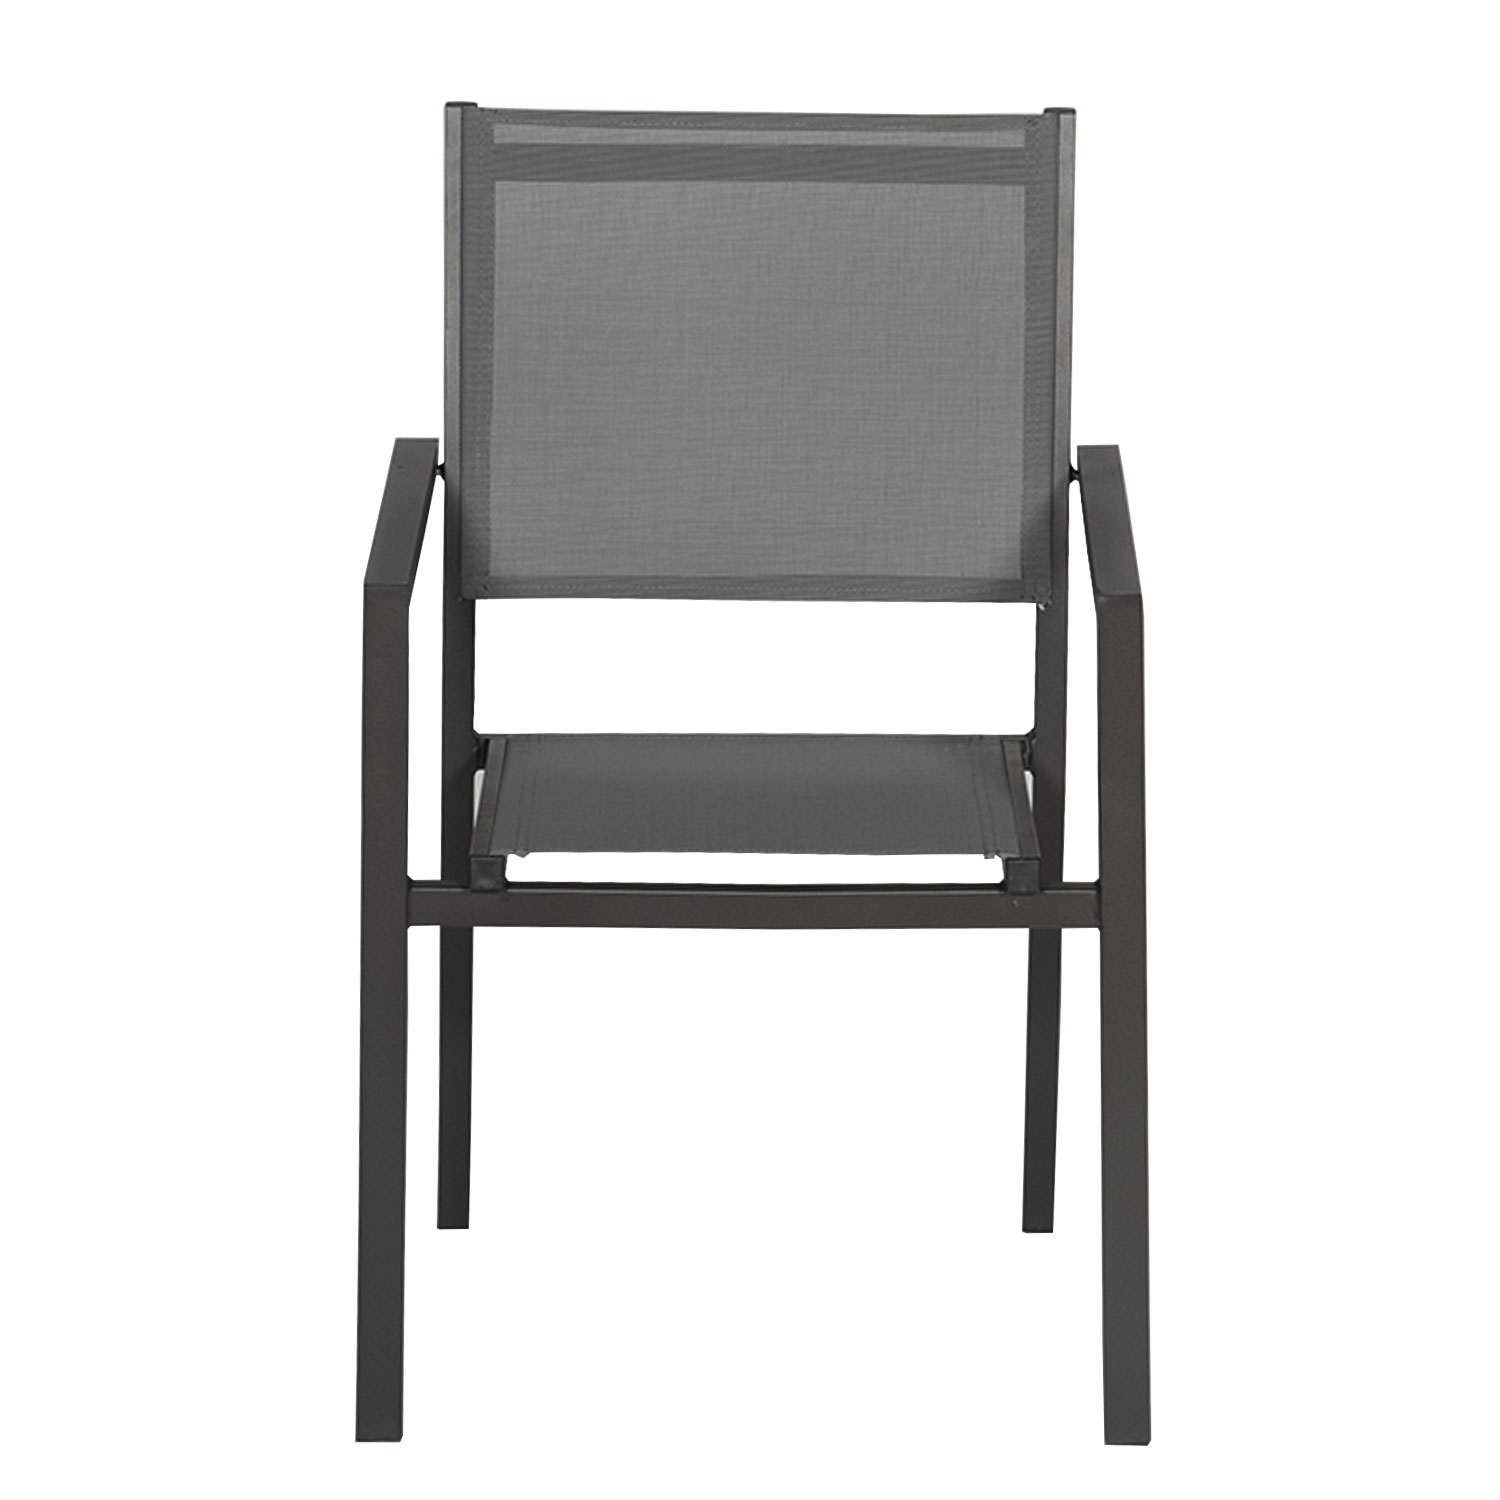 Juego de 4 sillas de aluminio antracita - textileno gris